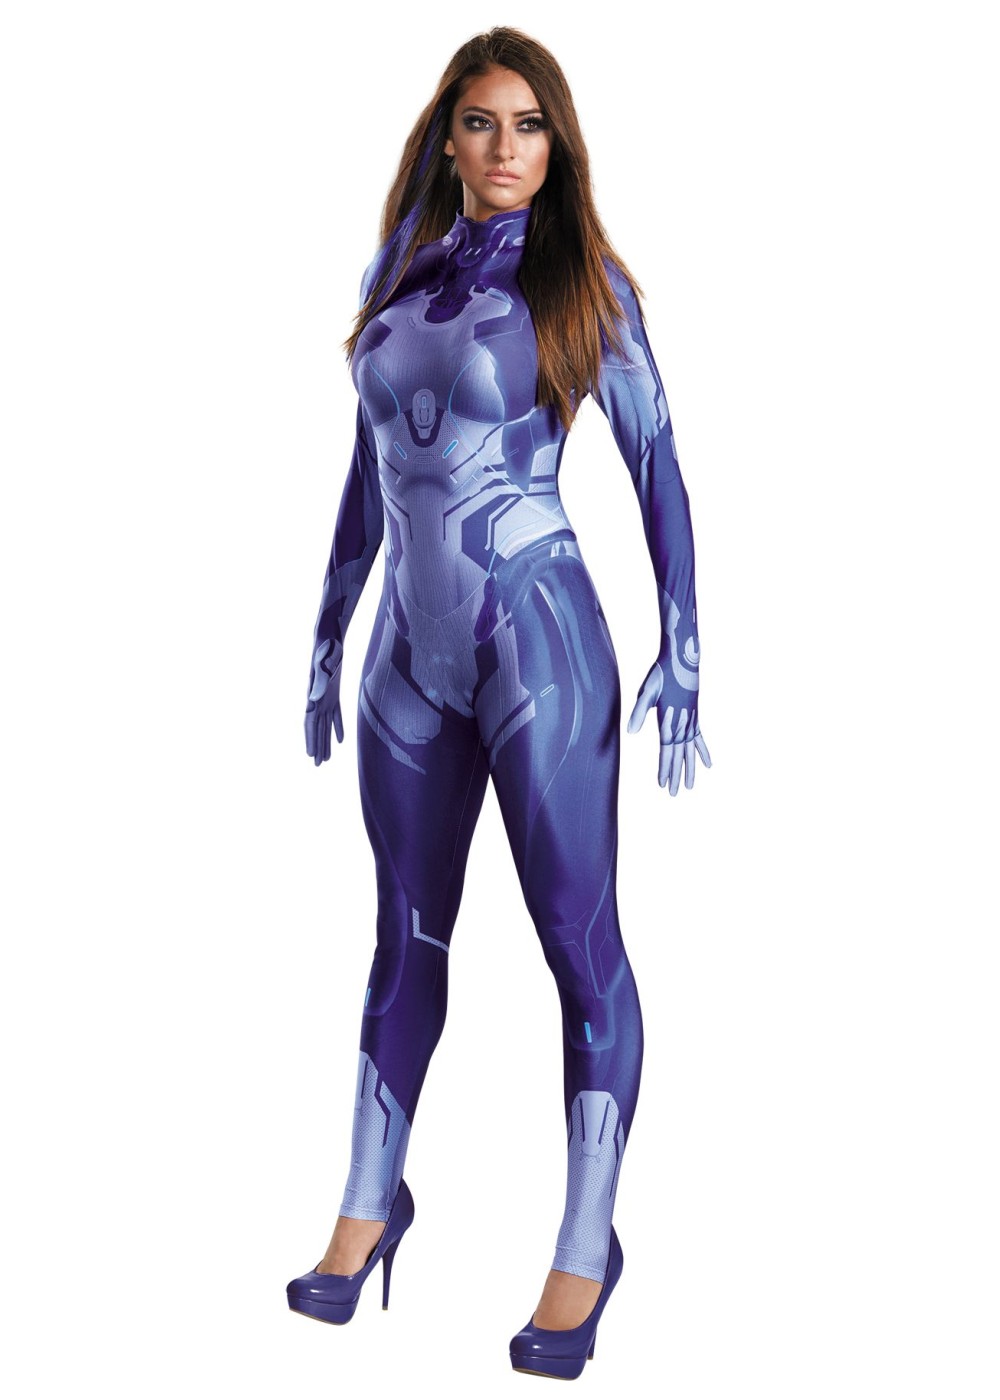 Halo Cortana Woman Costume